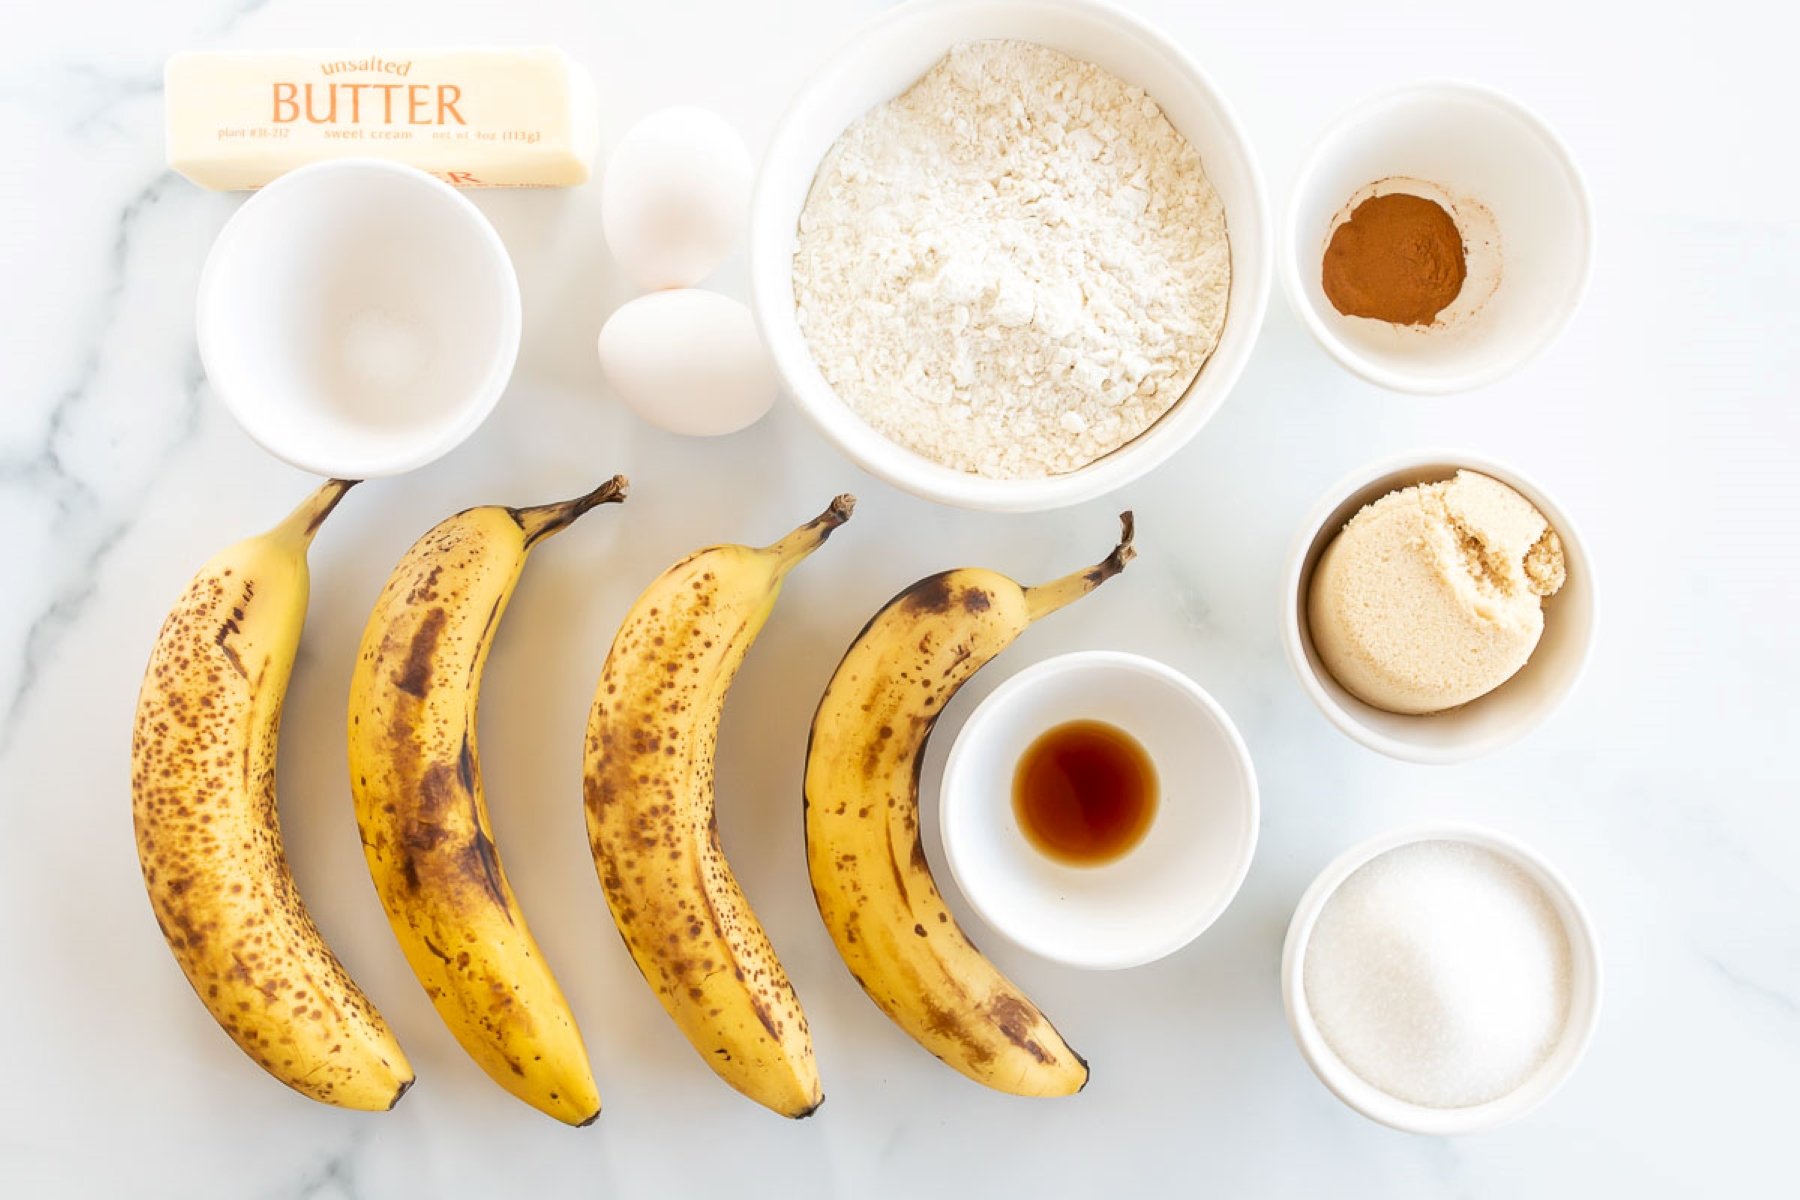 Ingredients for banana bread with no baking powder or baking soda.